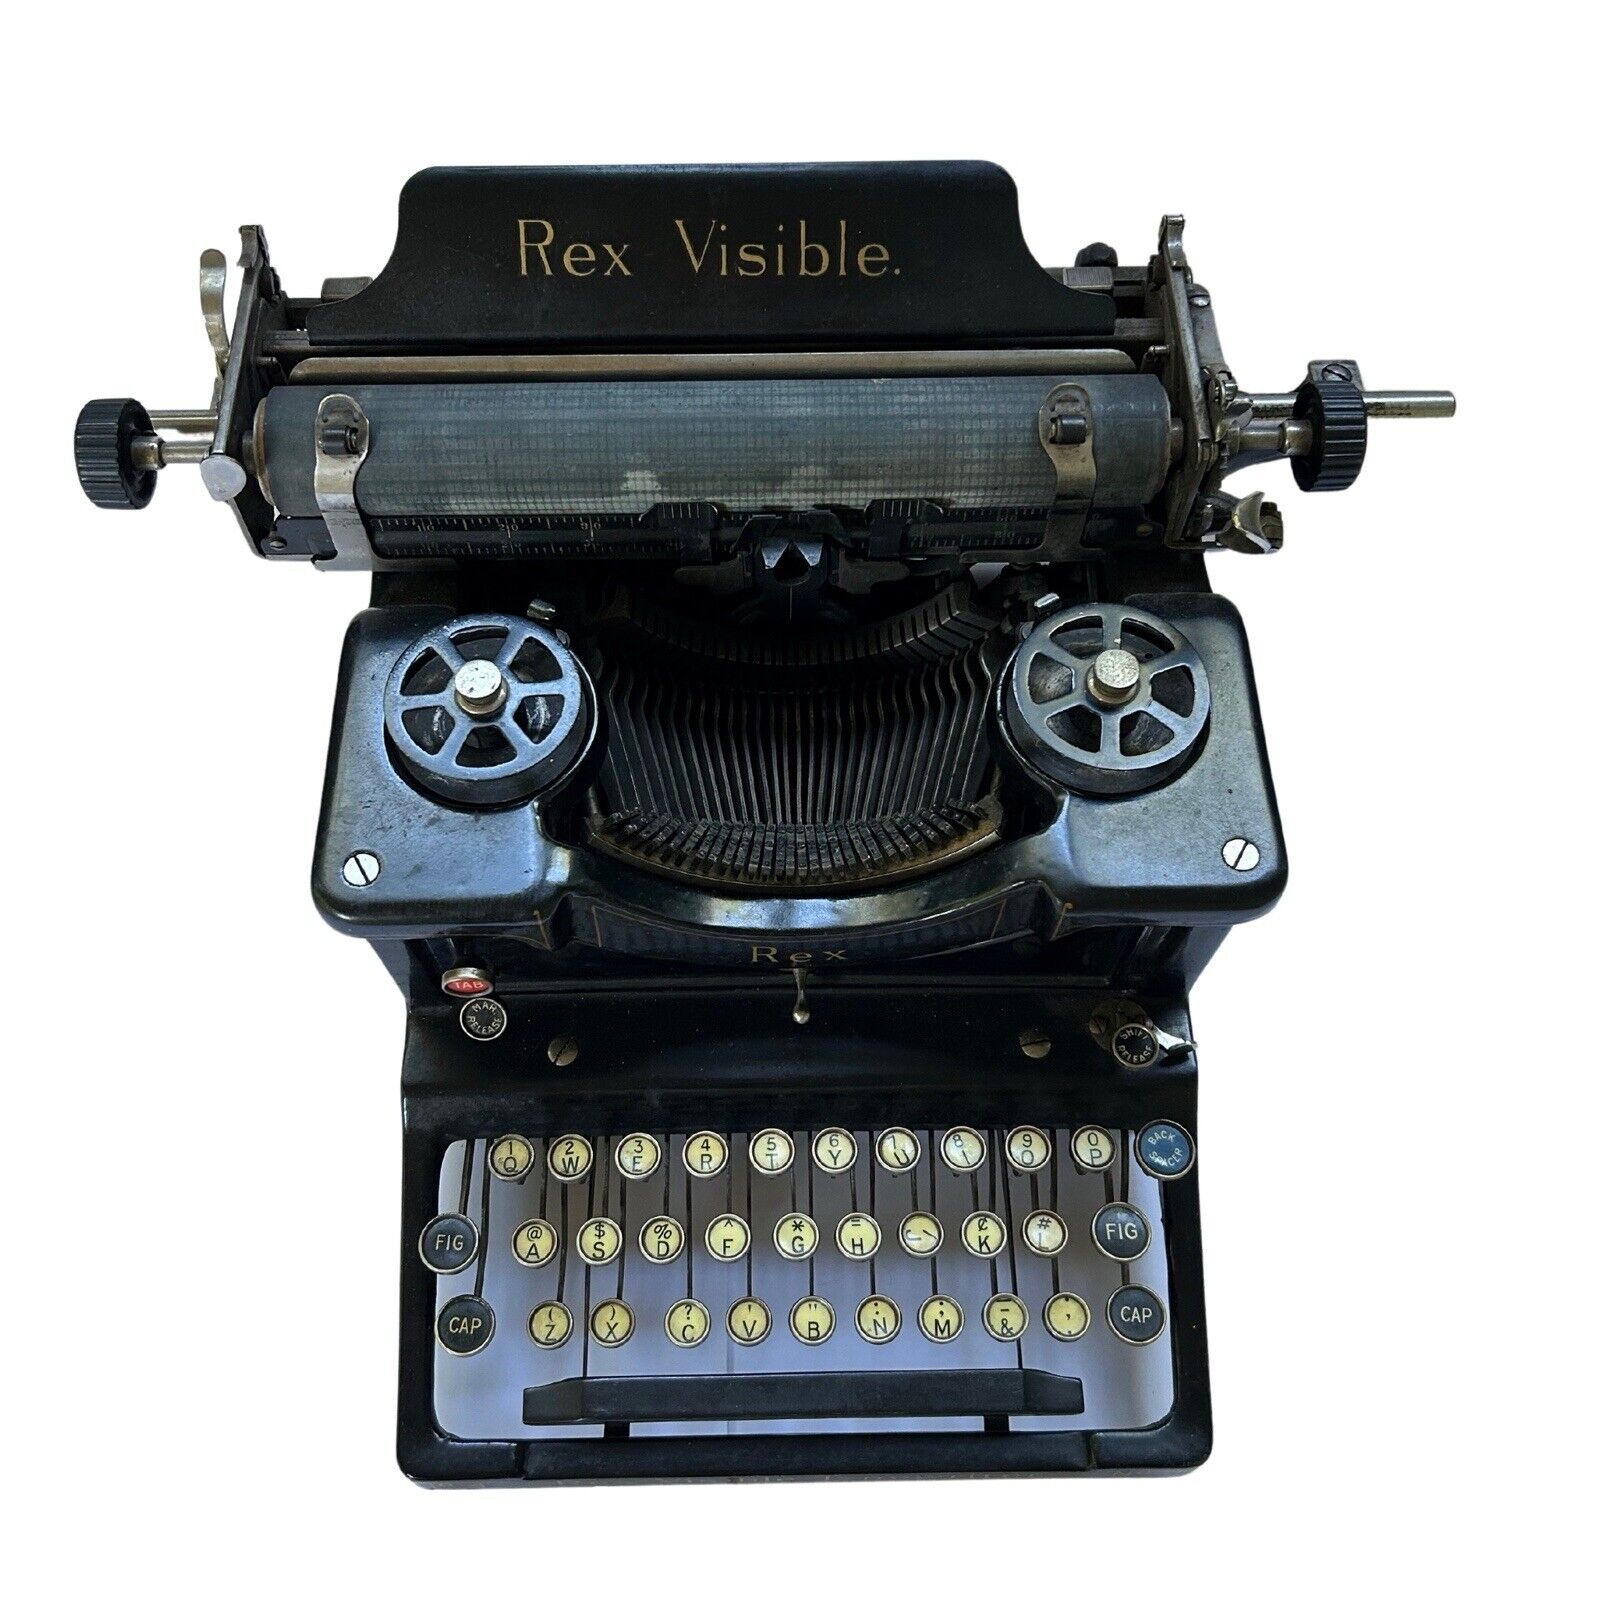 Antique Rex Visible No 4 Typewriter - KEYS WORK RARE FIND Type Writer Complete